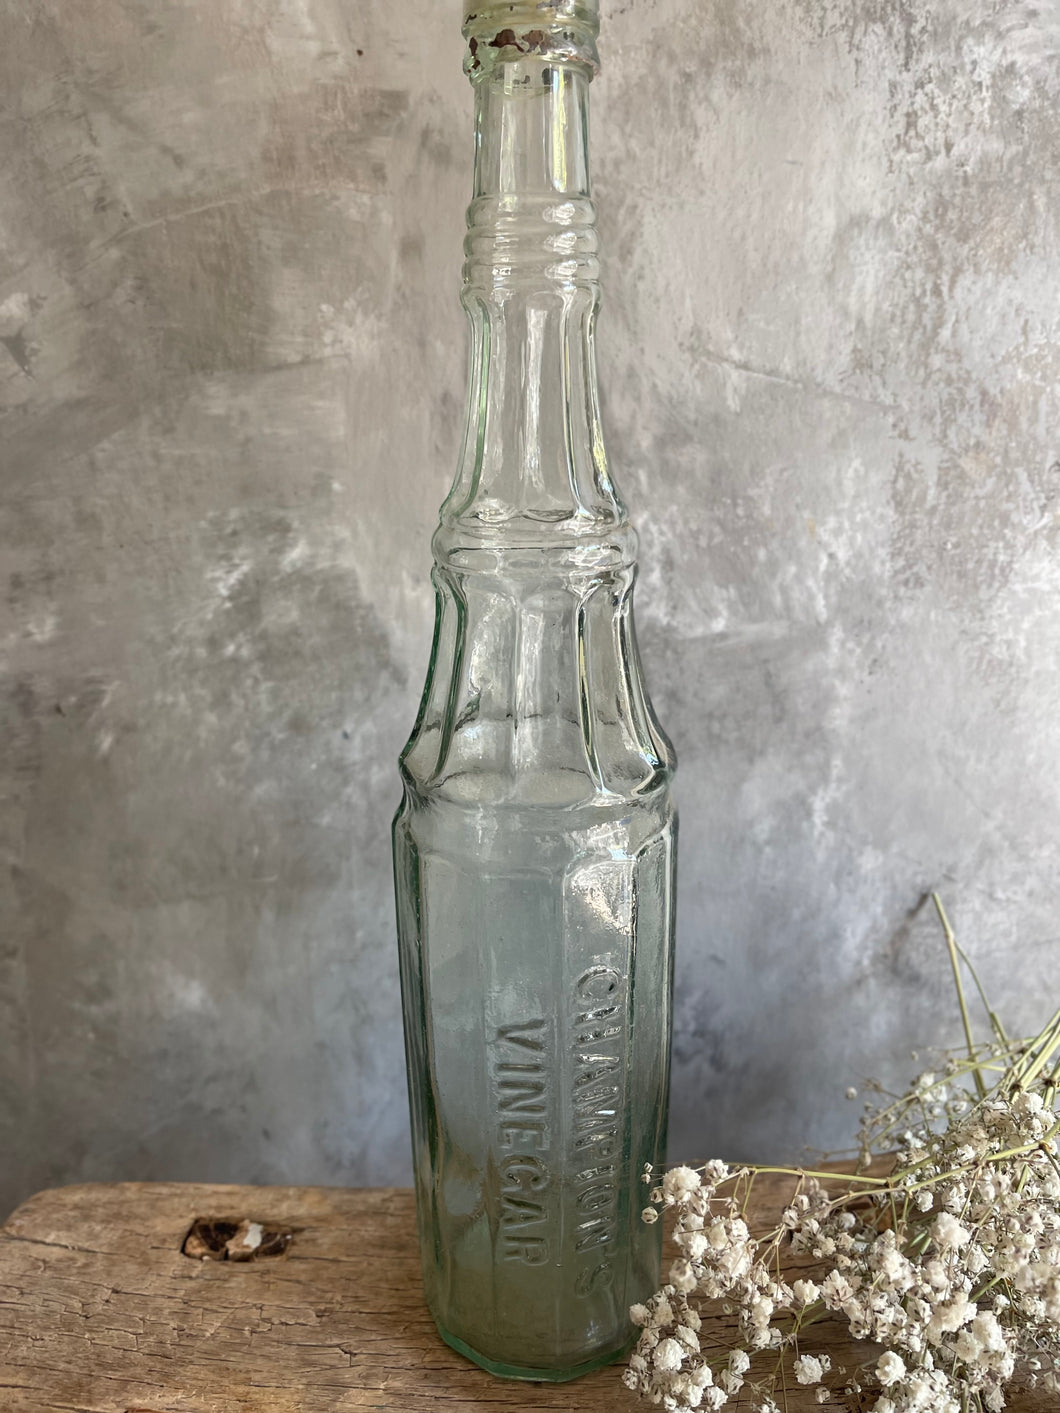 Antique Champions Vinegar Bottle - Circa 1900.